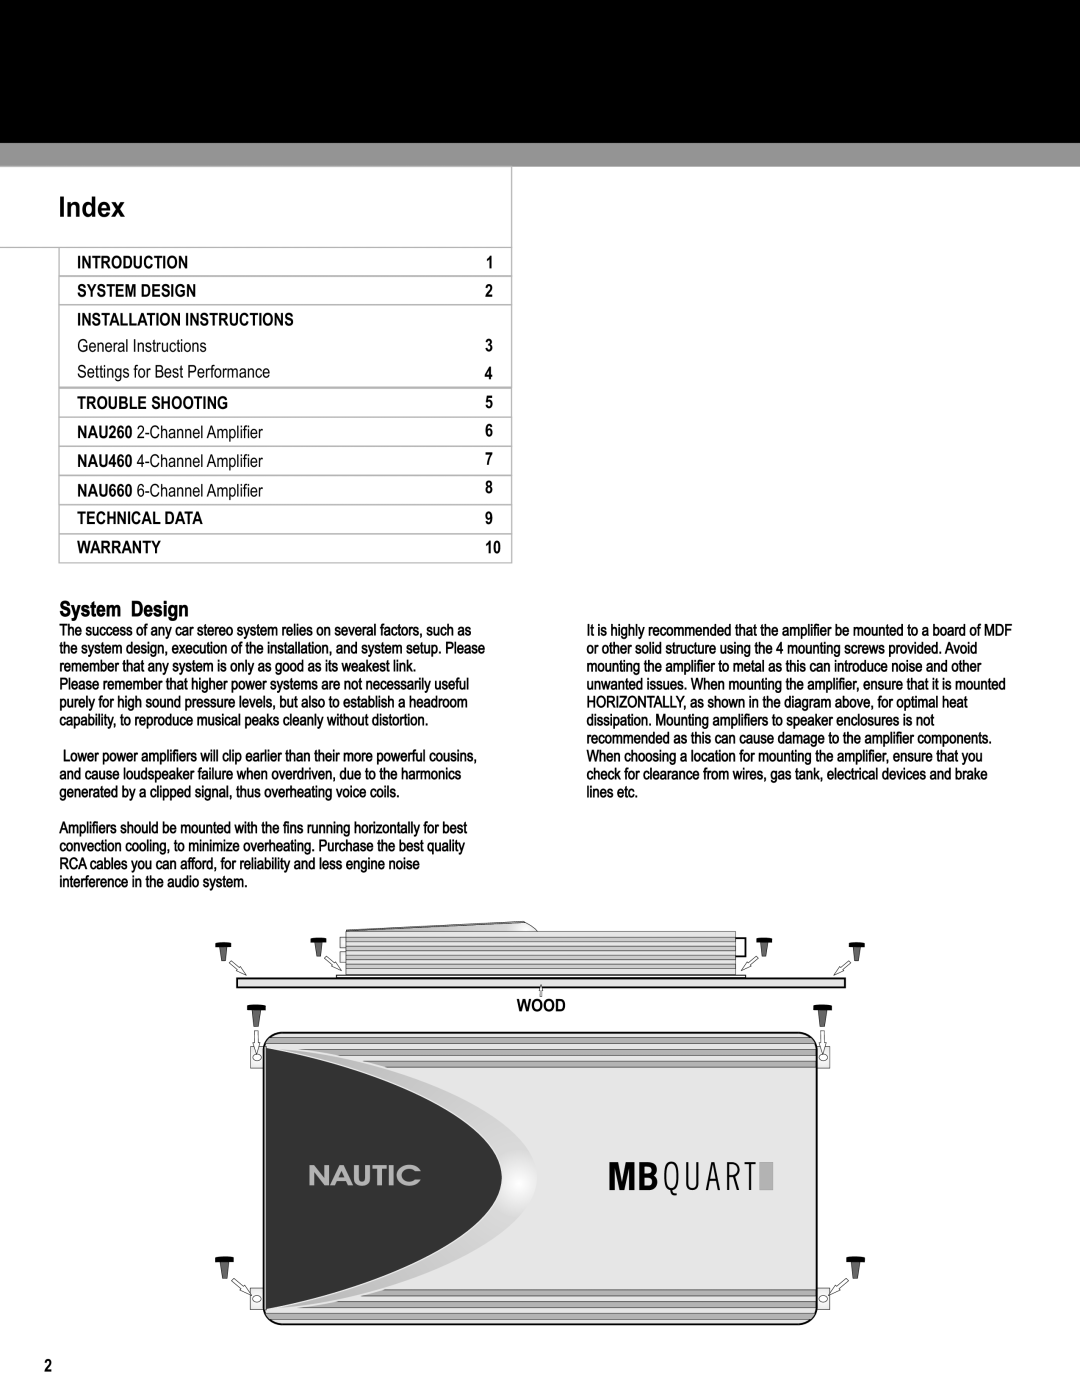 MB QUART NAU460, NAU260, NAU660 installation manual Index, Nautic, System Design 